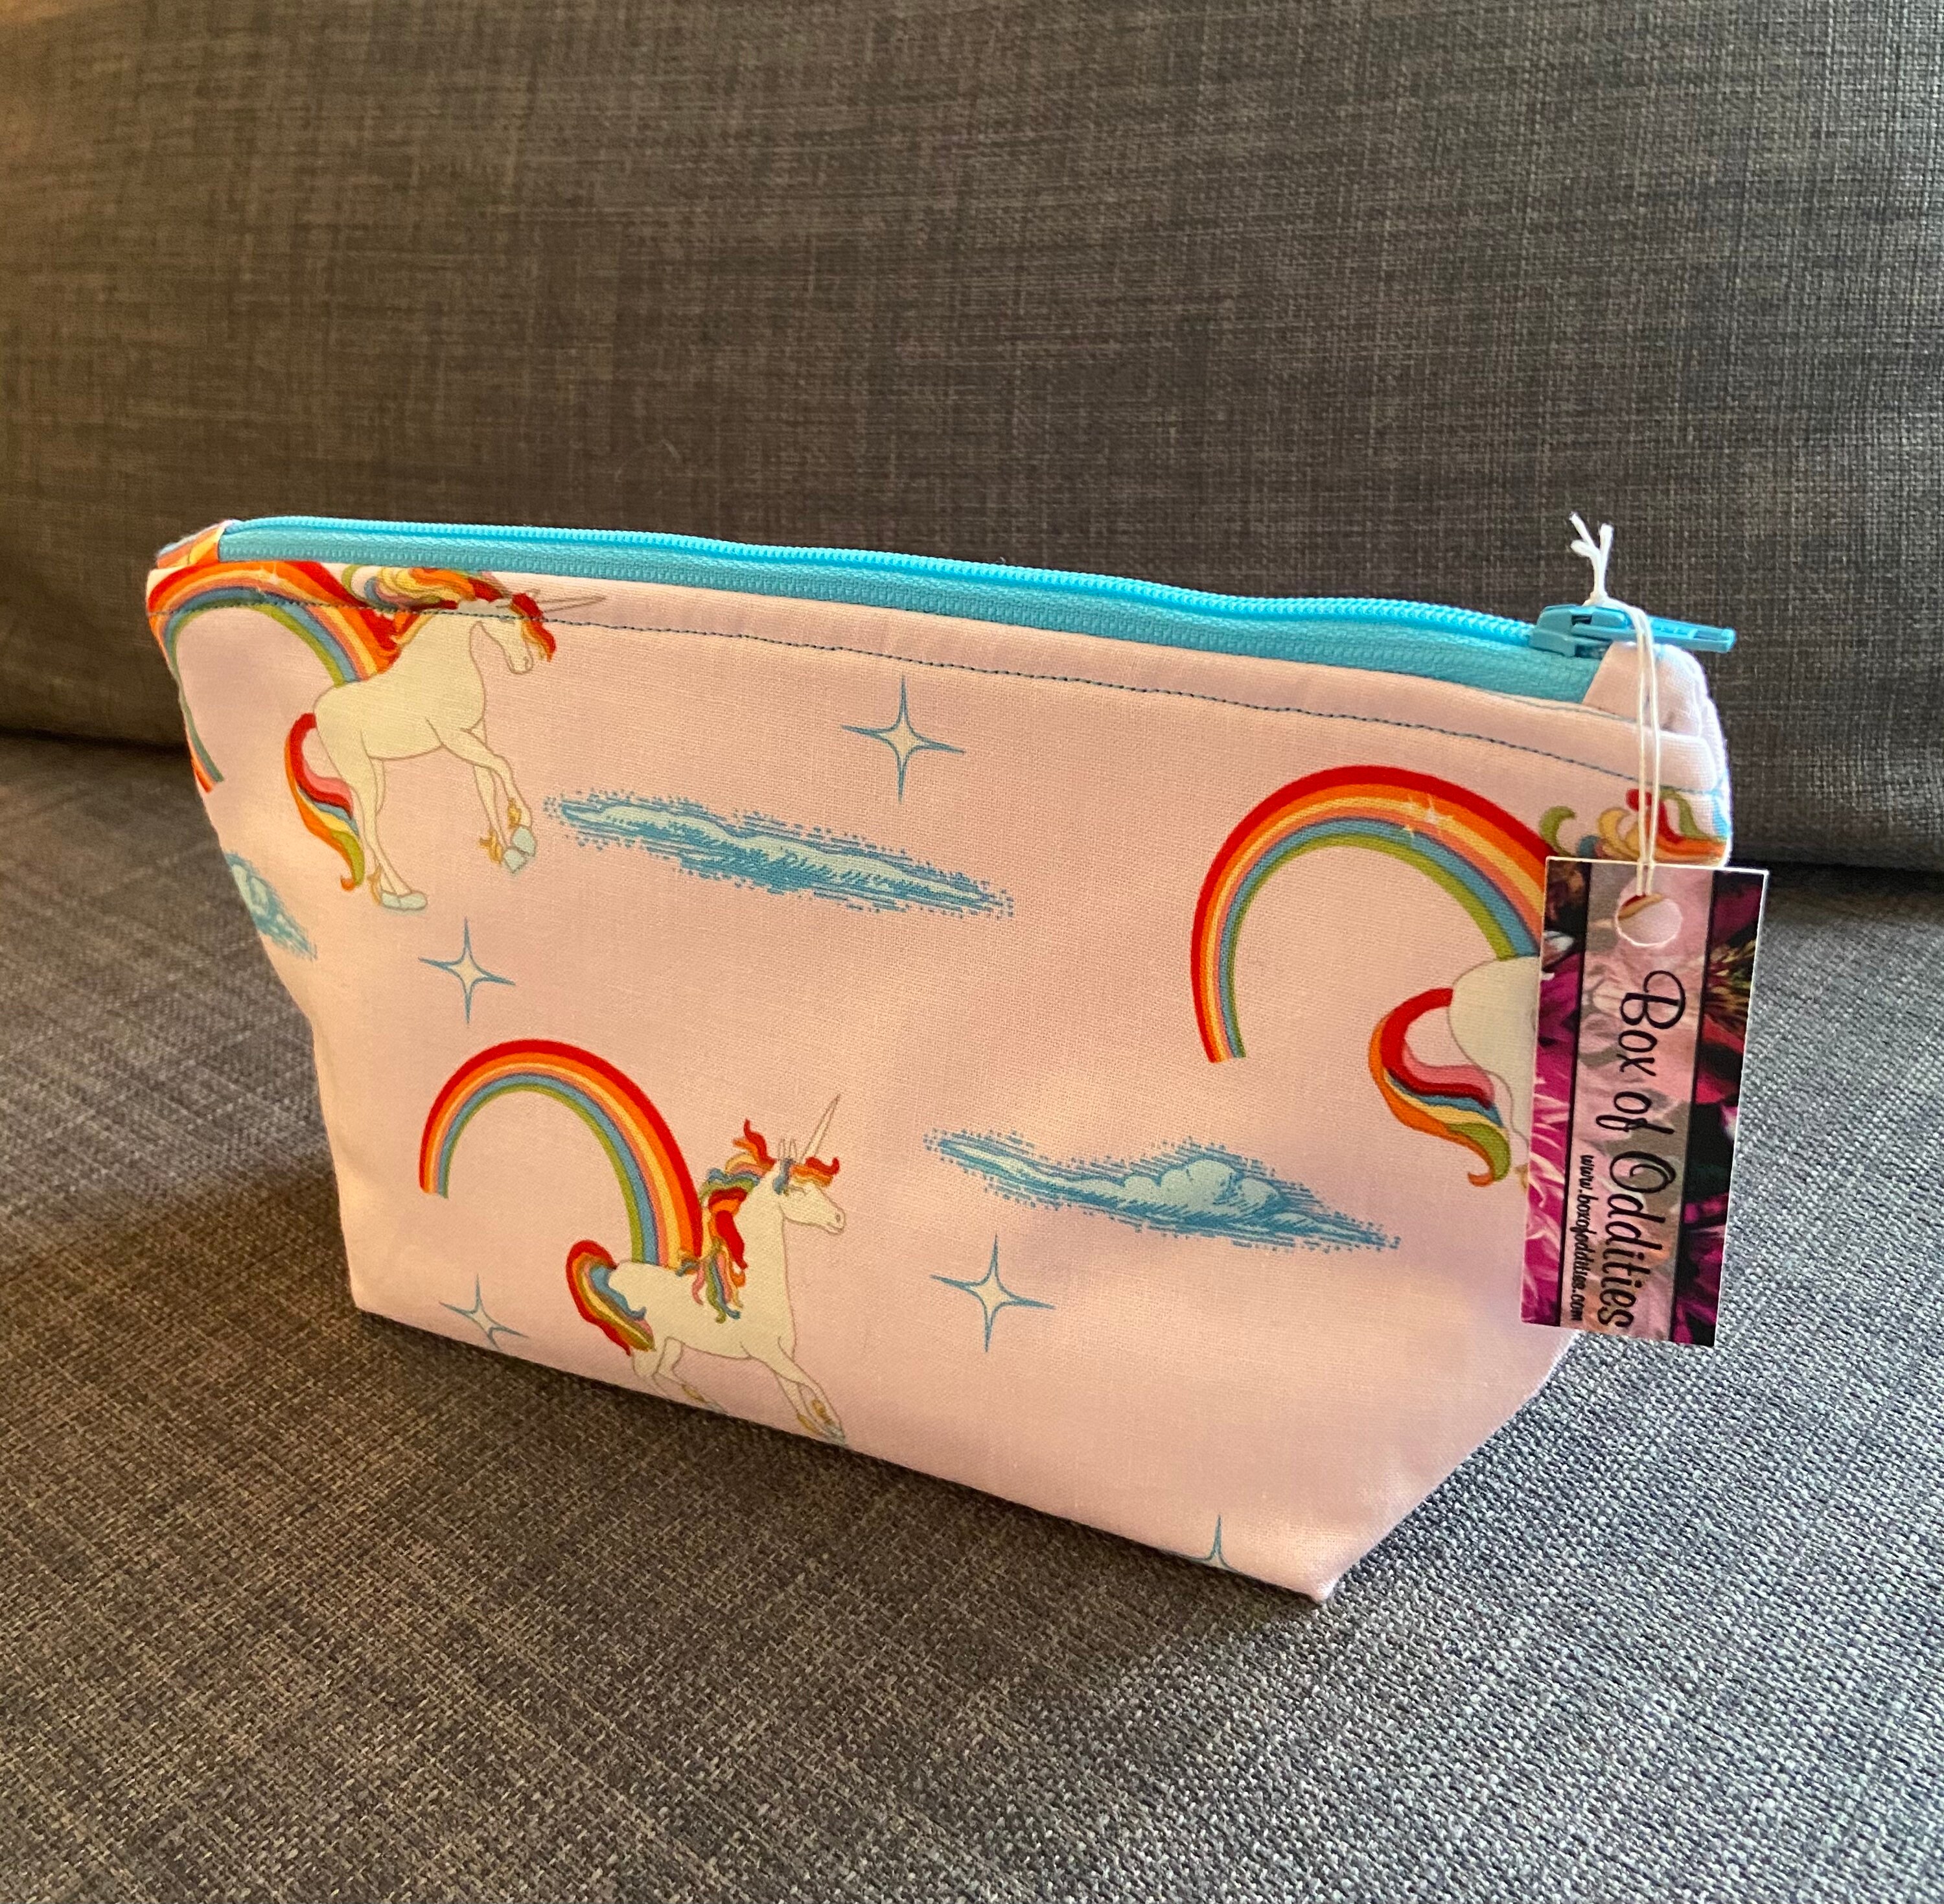 Reusable Snack Bag, Small 2-Pack- Rainbows & Unicorns